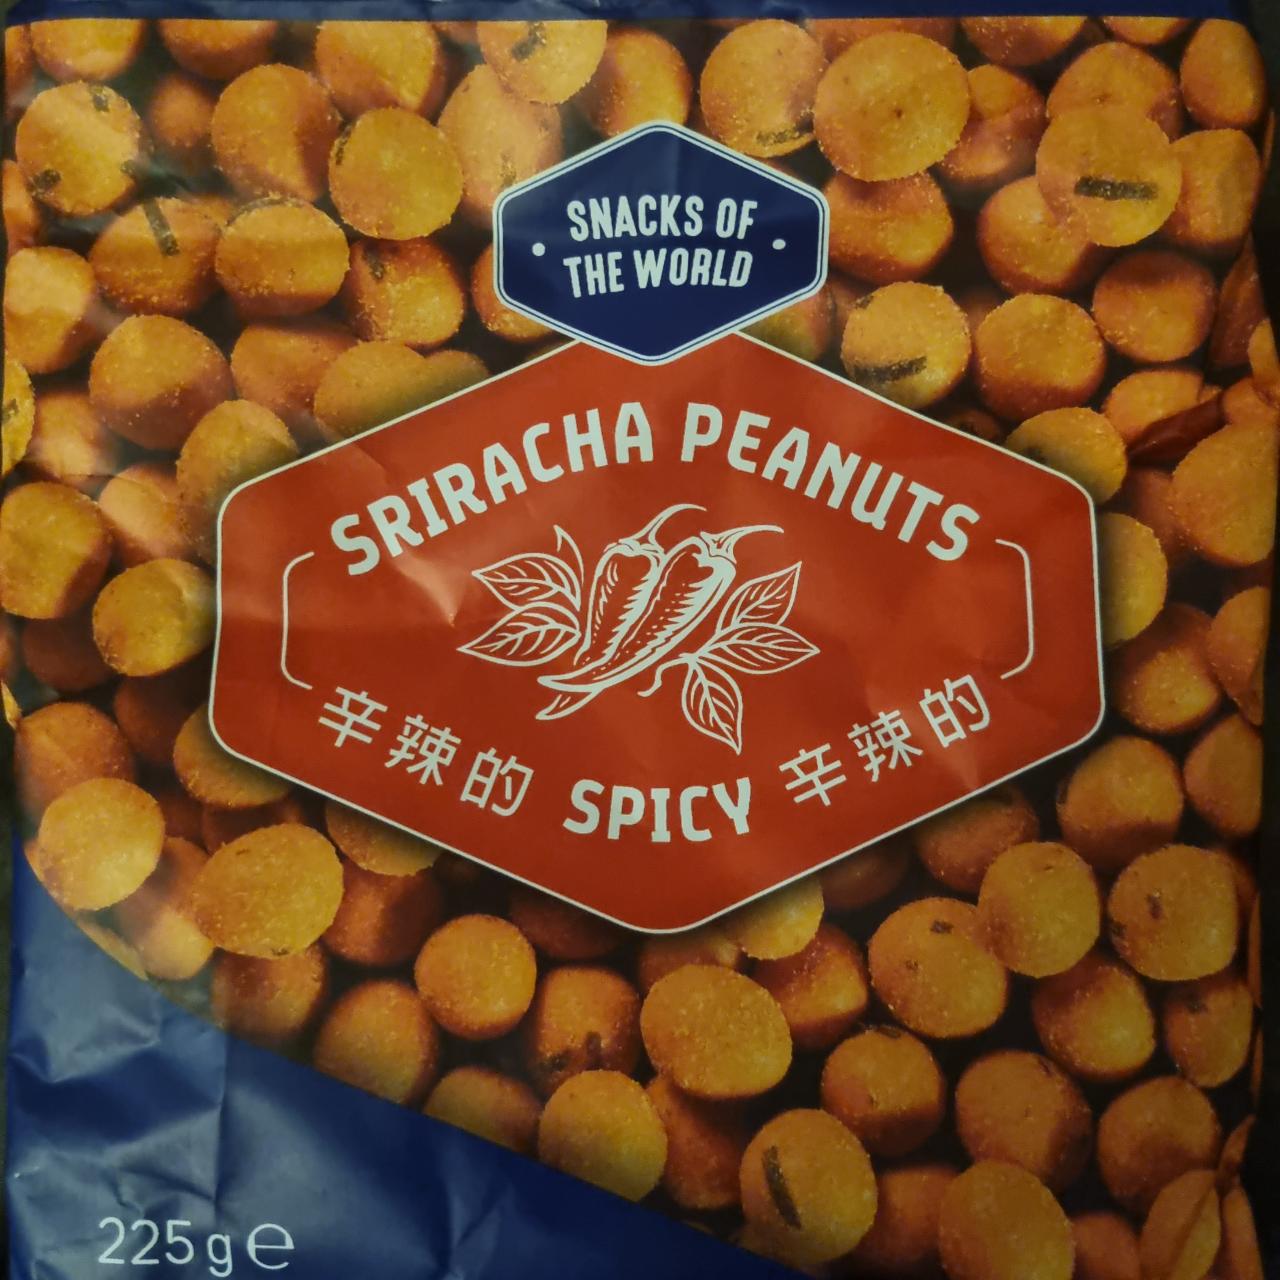 Zdjęcia - Sriracha peanuts spicy Snacks of the world